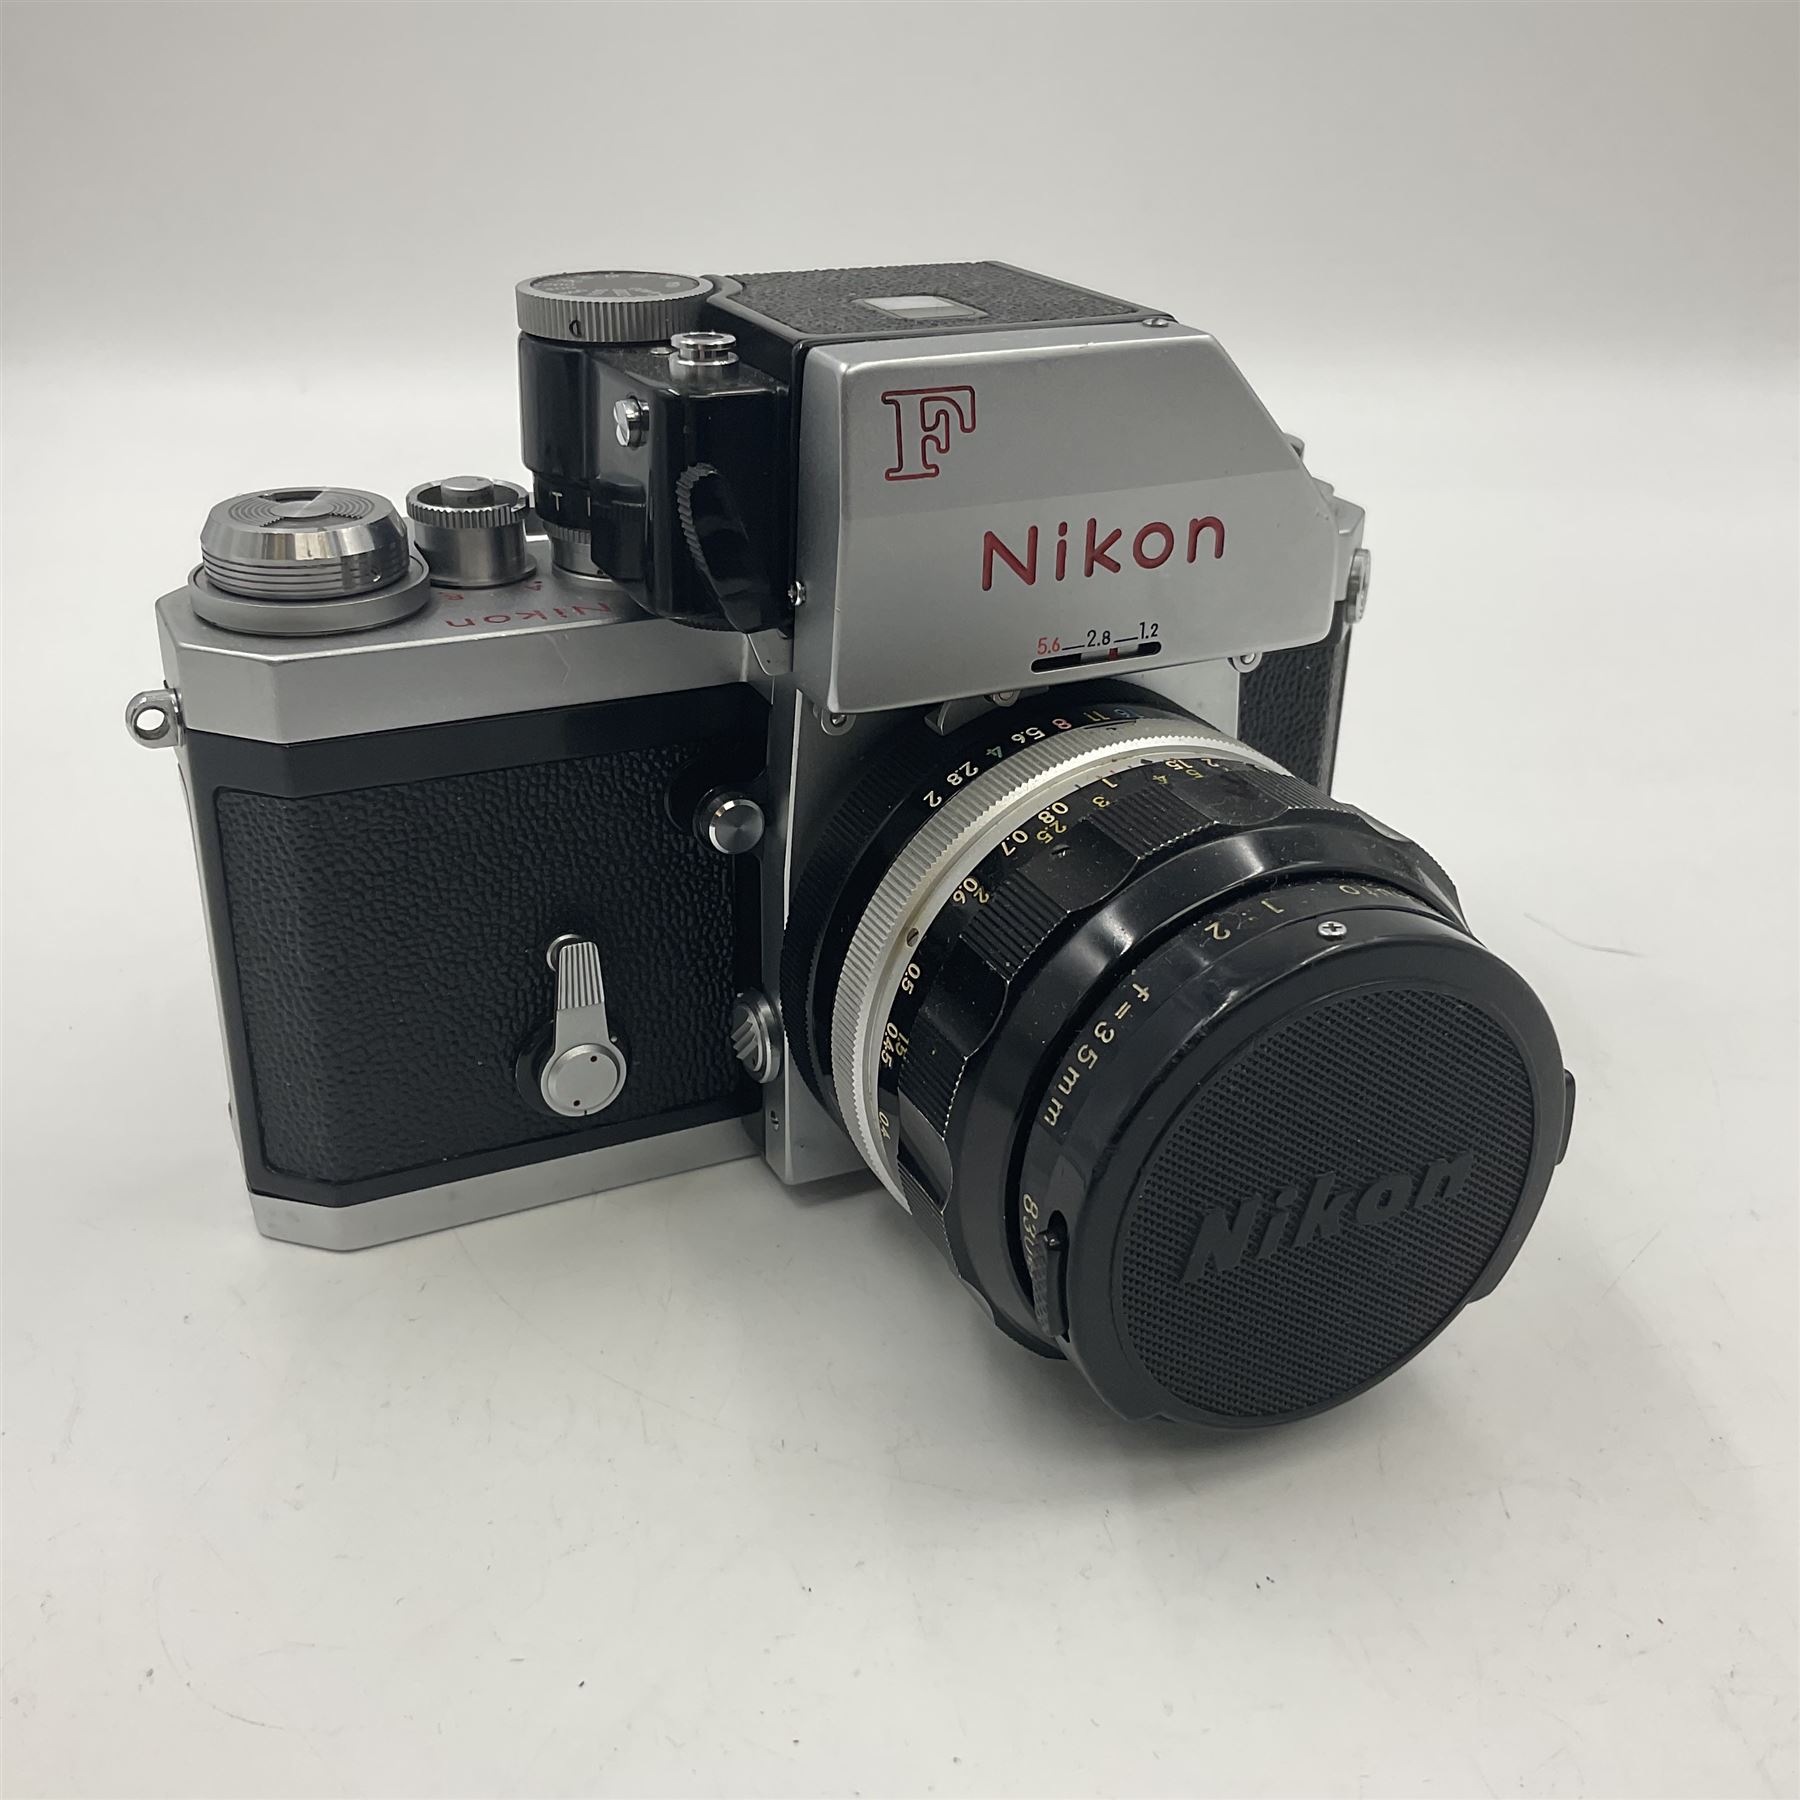 Nikon photomic Ftn camera body - Image 12 of 12